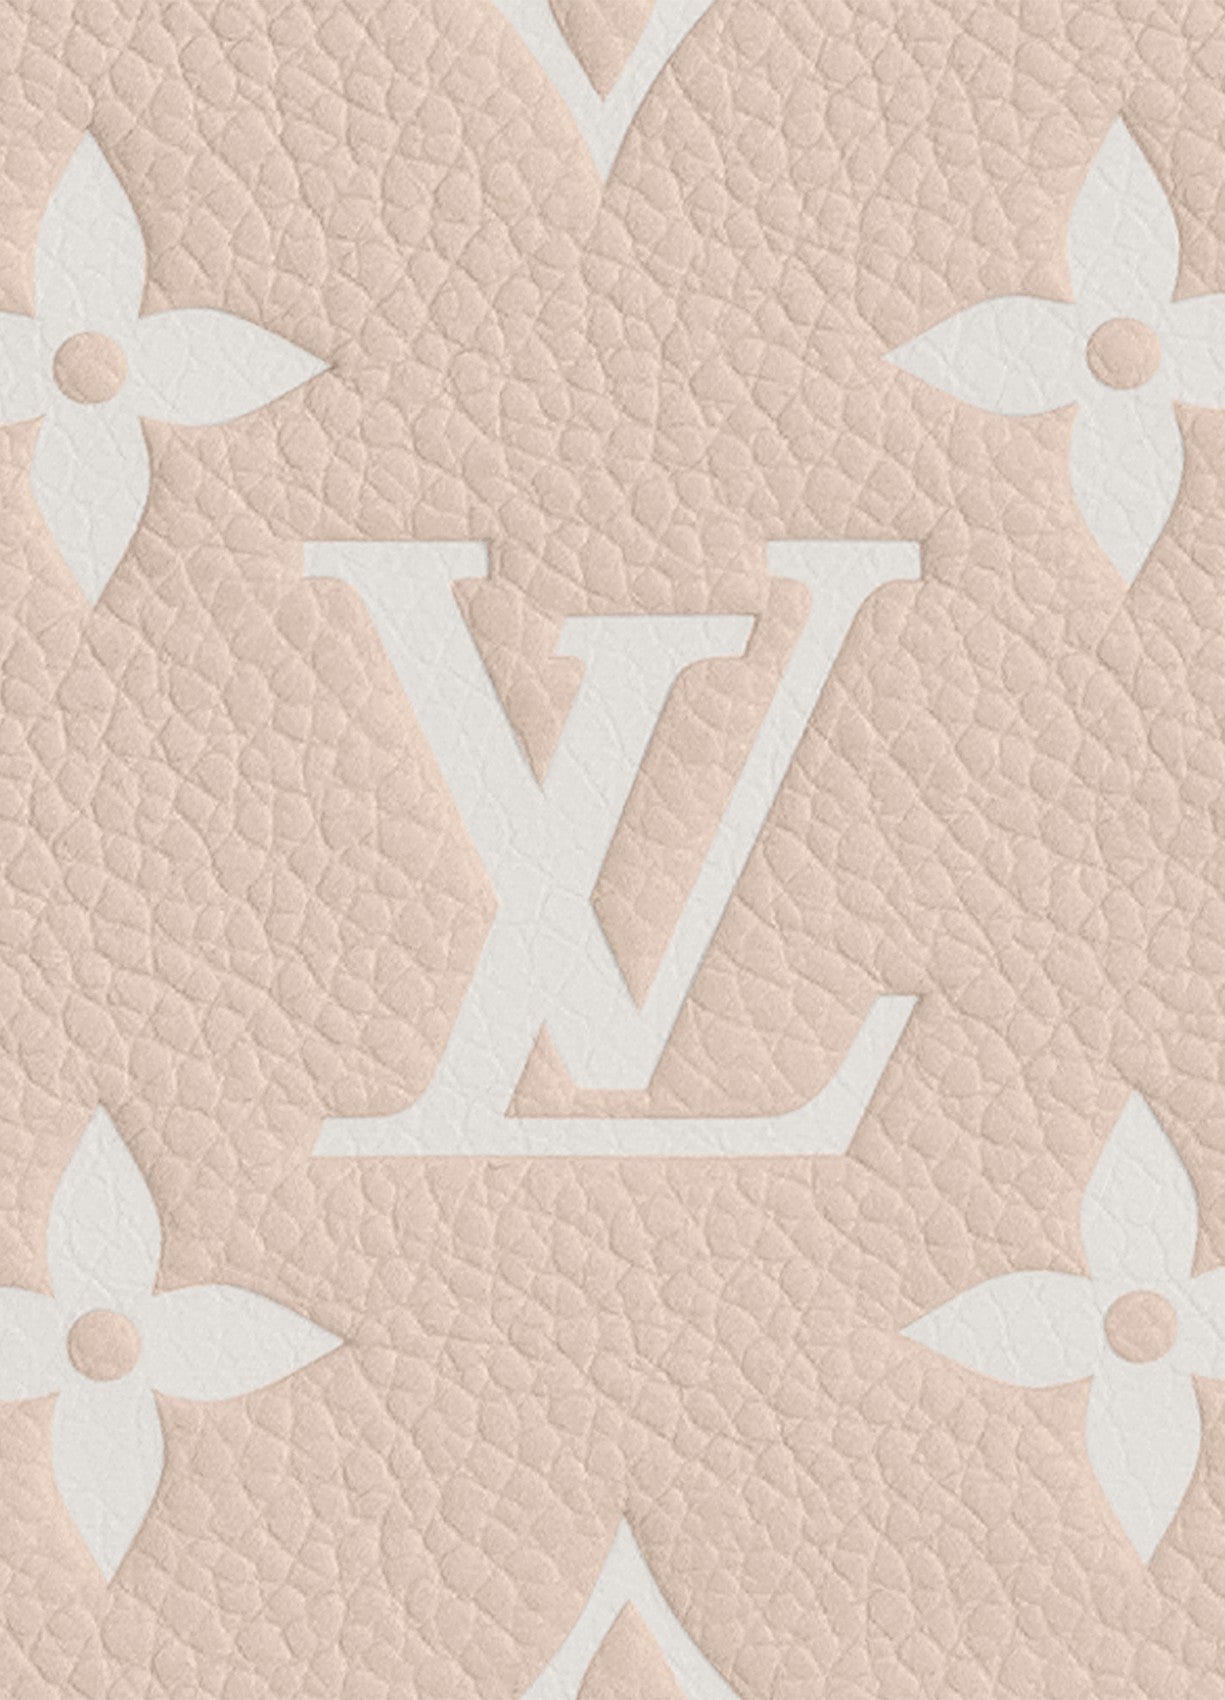 Louis Vuitton Bagatelle NM Handbag Spring in The City Monogram Empreinte Leather Multicolor